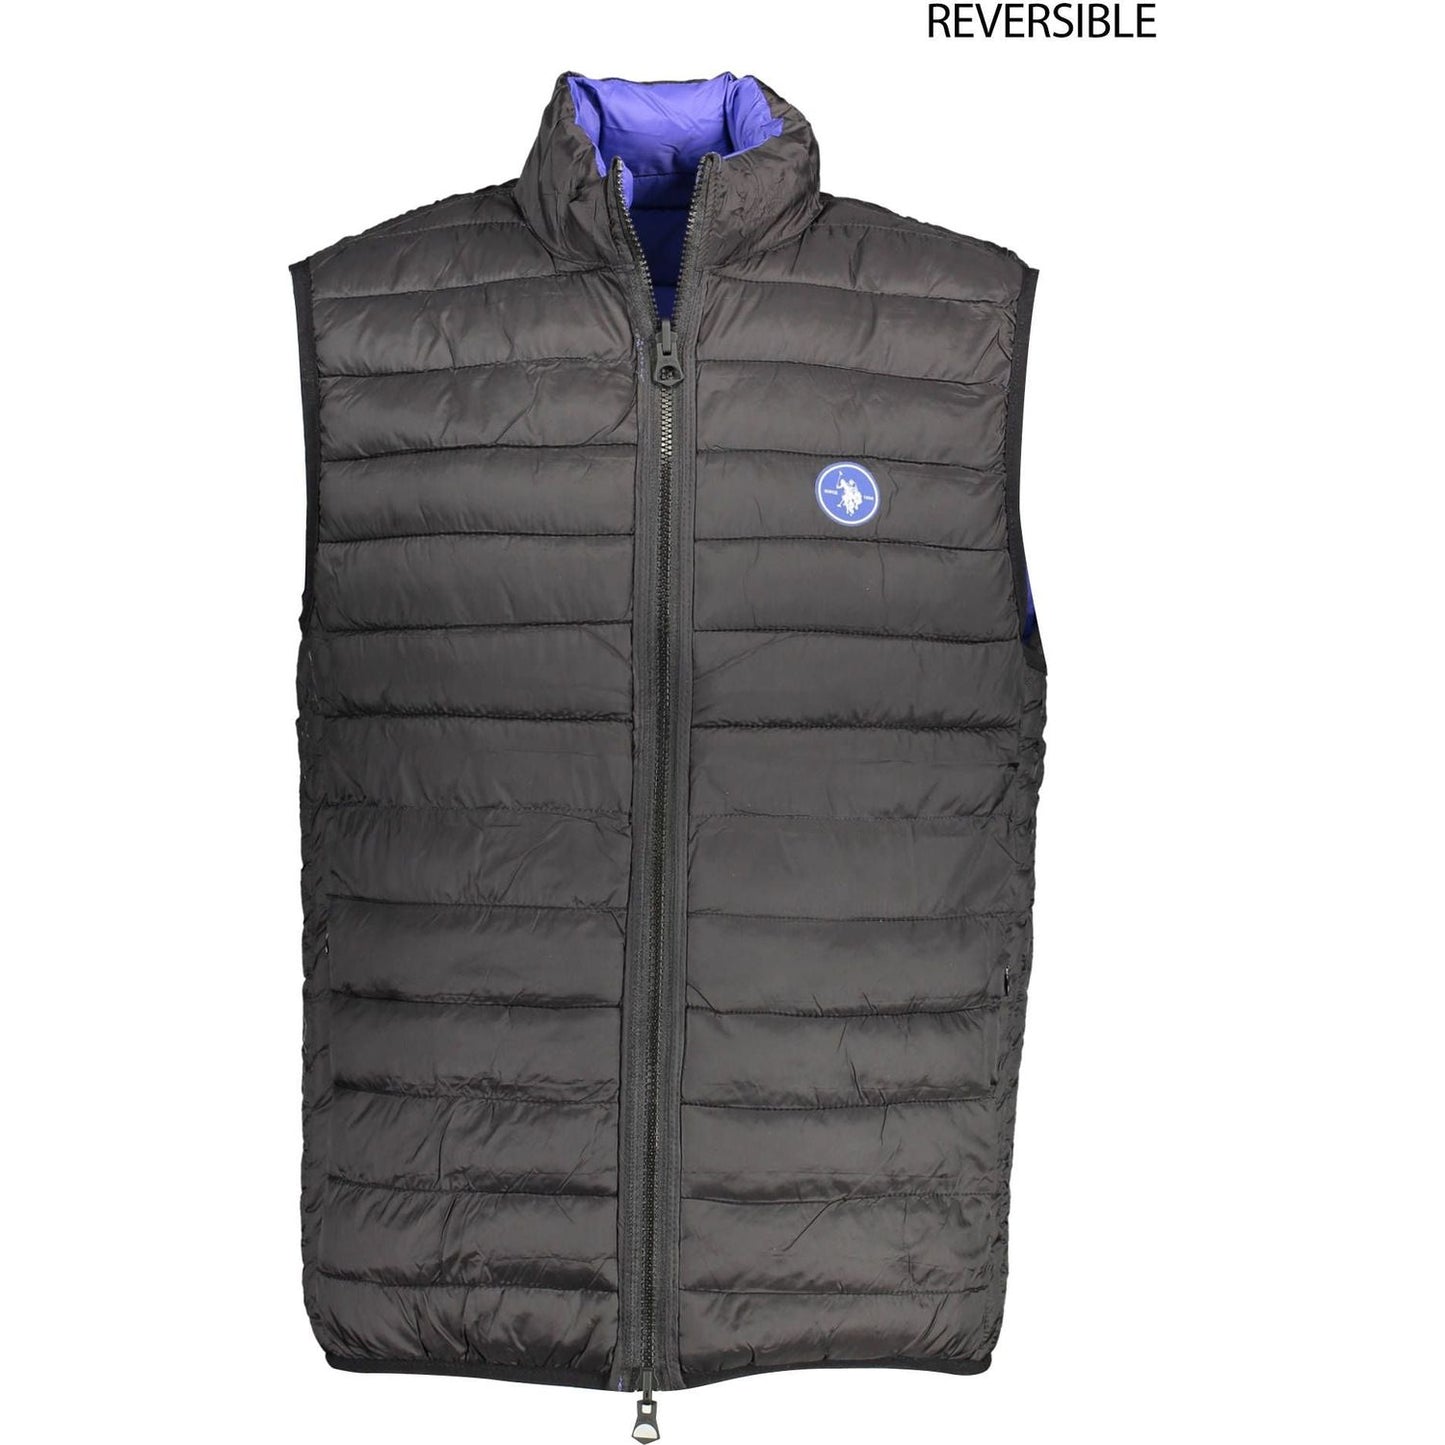 U.S. POLO ASSN. Sleek Reversible Sleeveless Jacket sleek-reversible-sleeveless-jacket